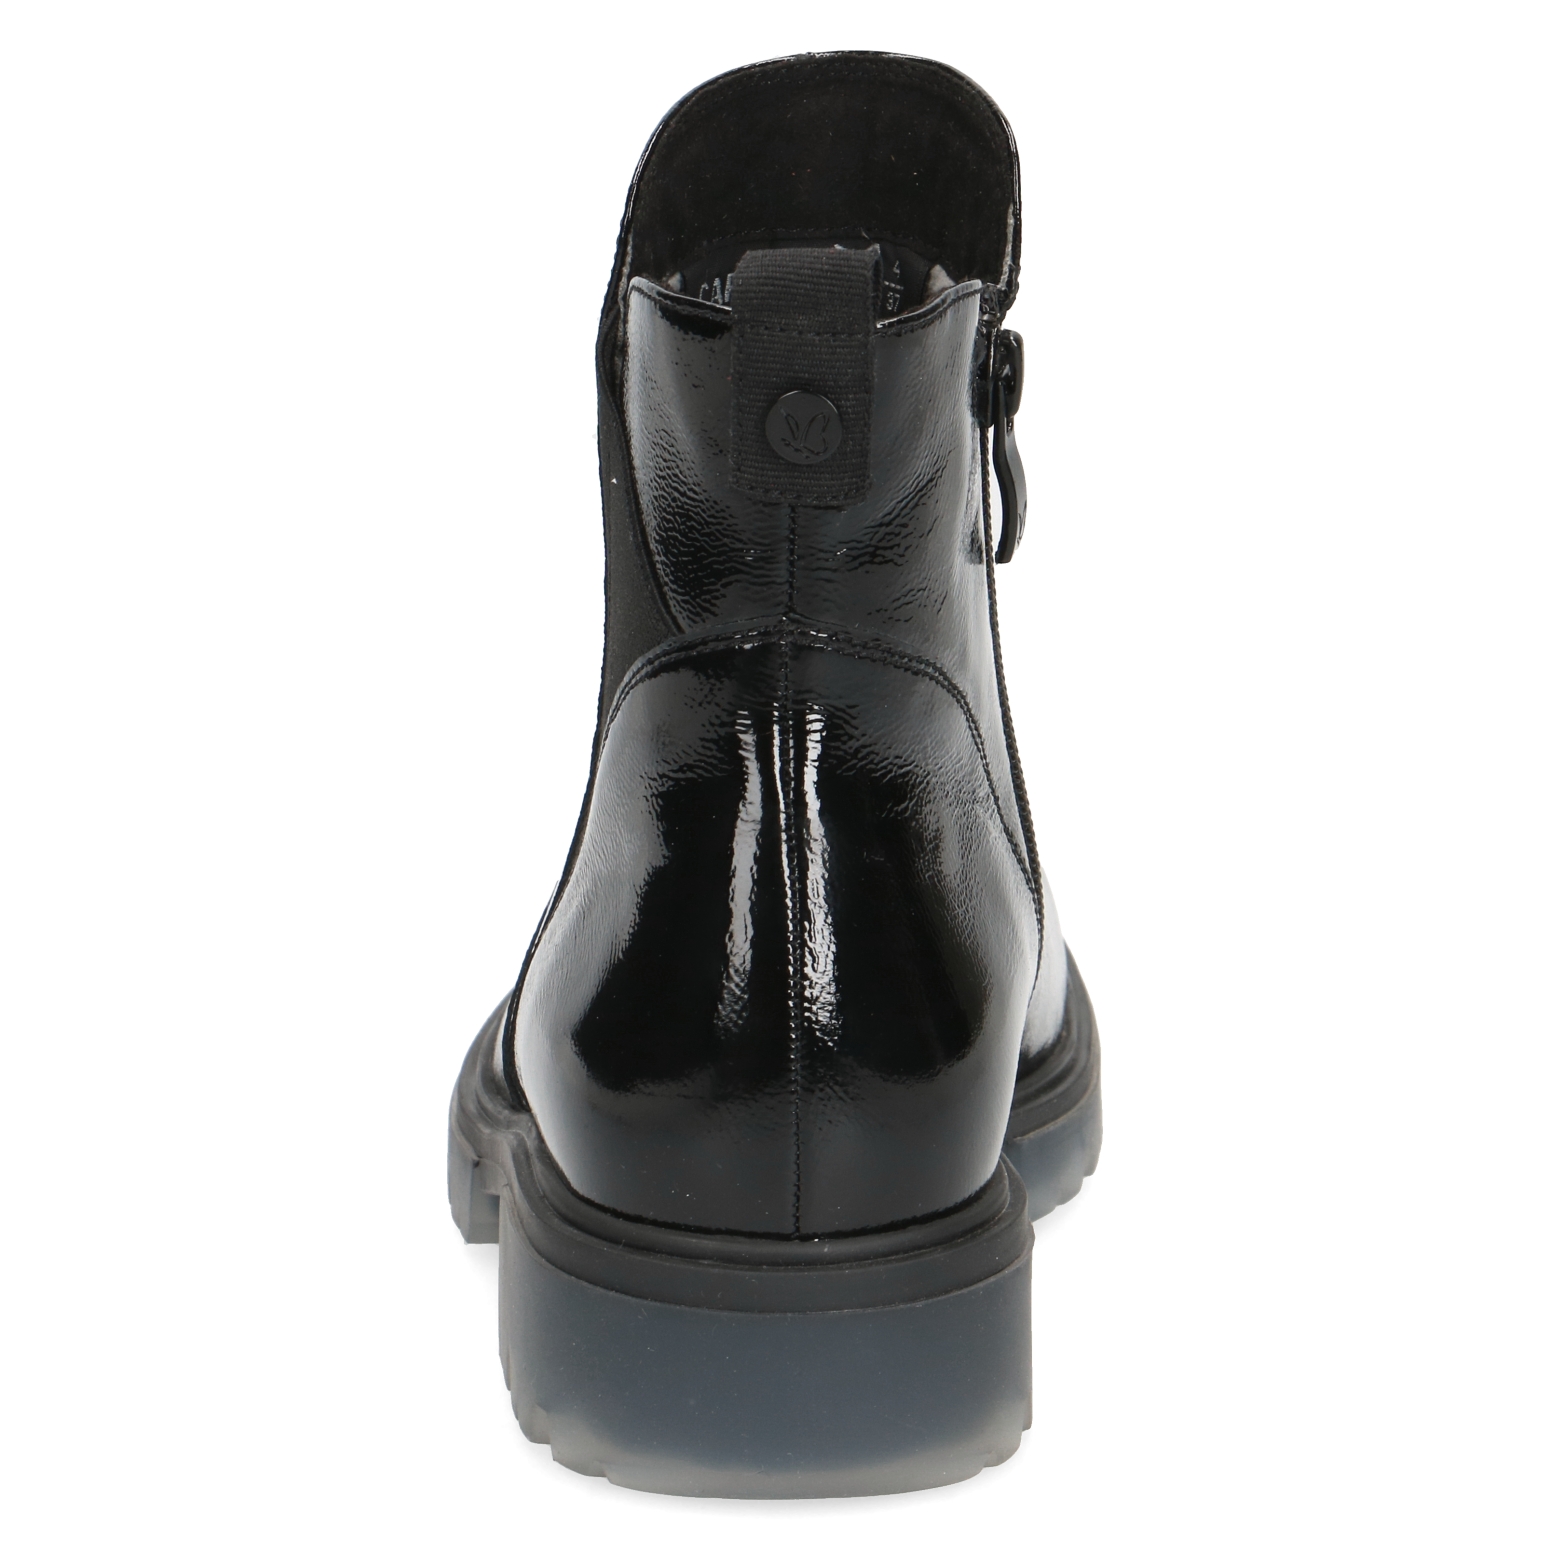 Caprice Stiefelette - Black Patent leather